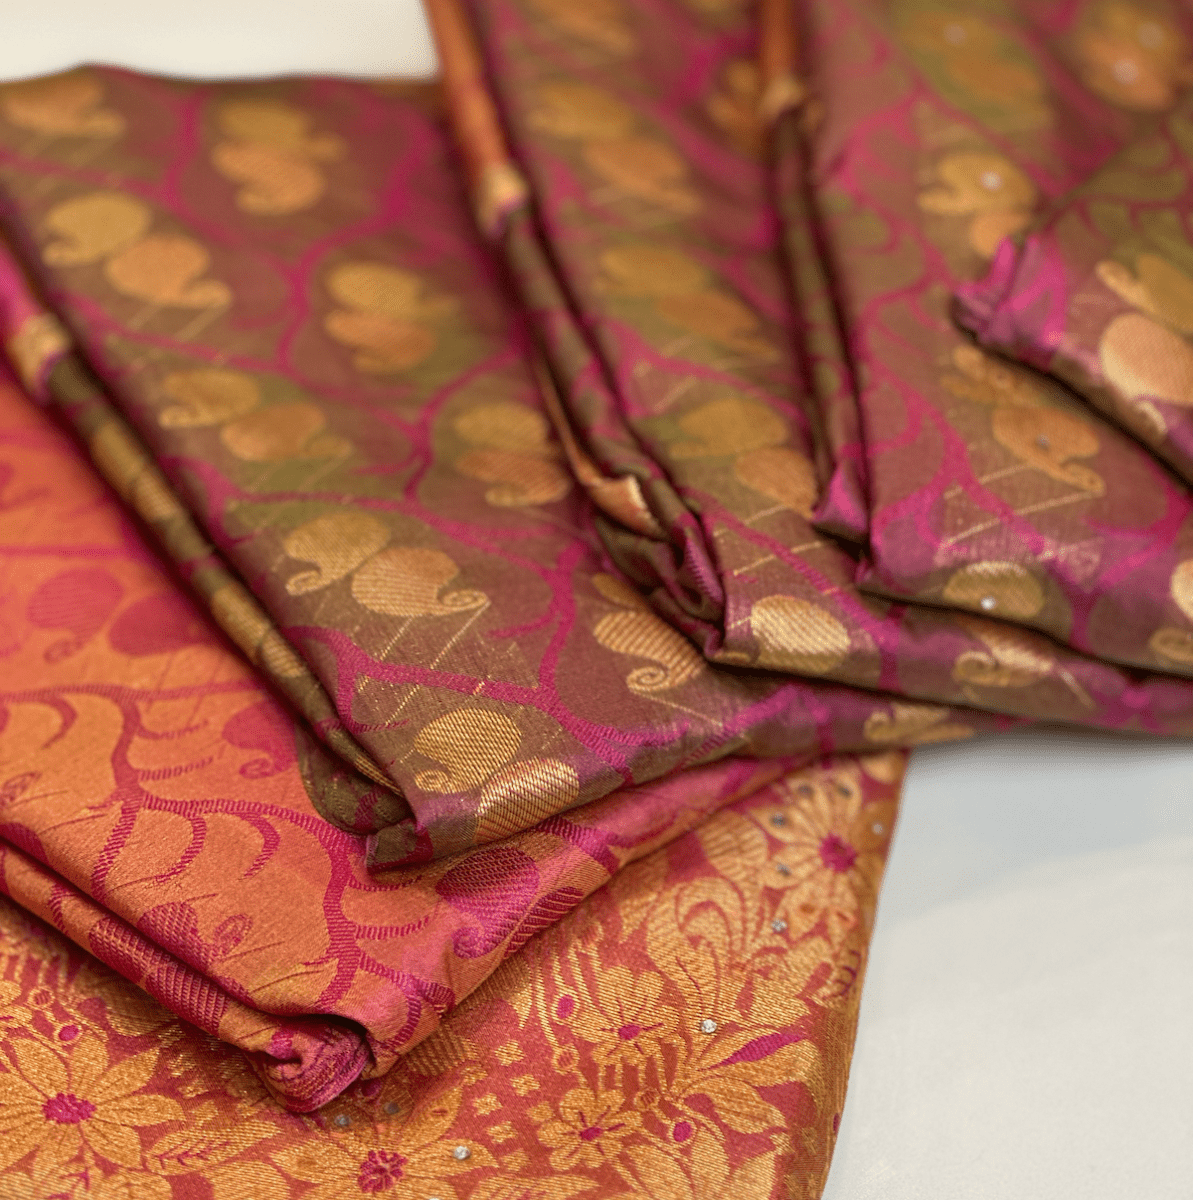 Fancy & Adorned Handmade Sari Aprons-Hand Jeweled Black & Silver #40-Magic Hour